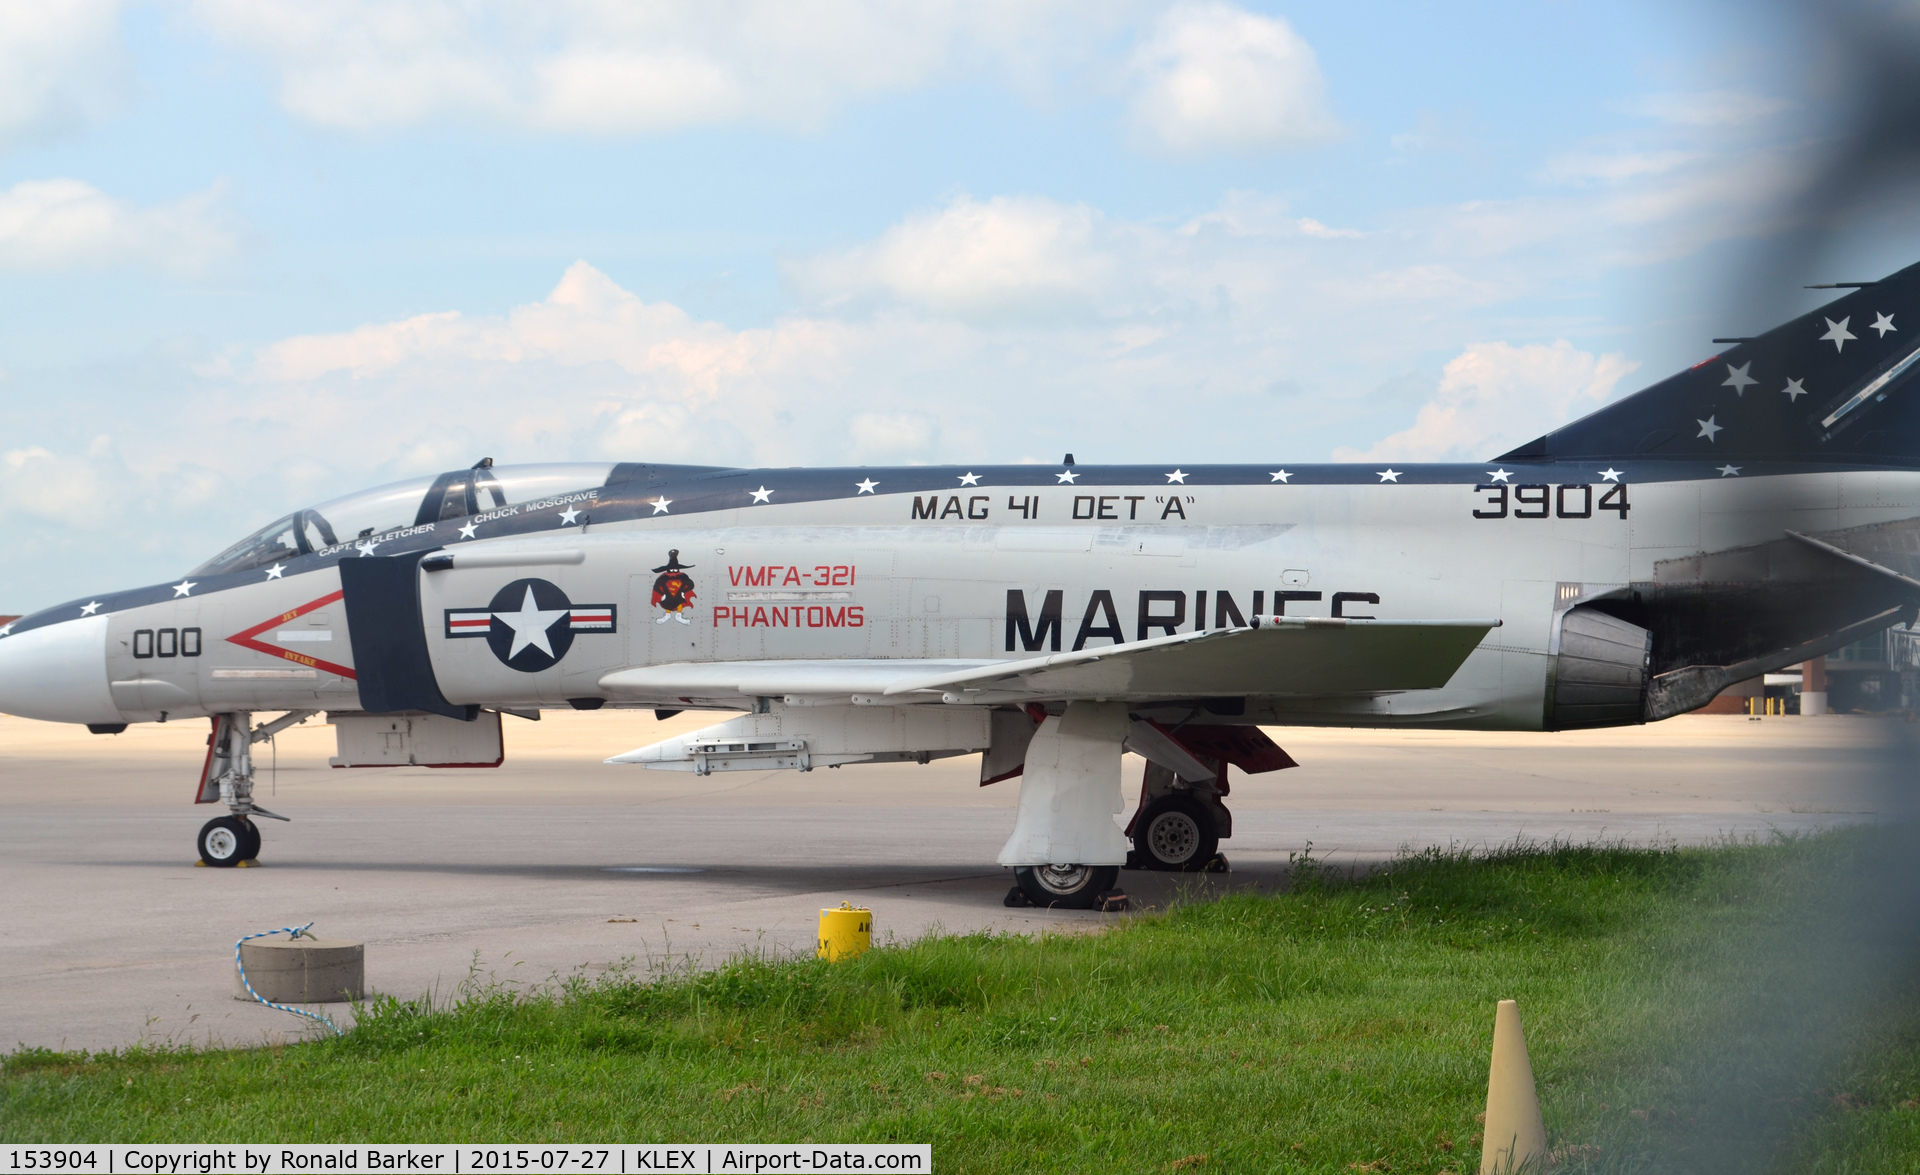 153904, McDonnell F-4S Phantom II C/N 2590, Parked Lexington